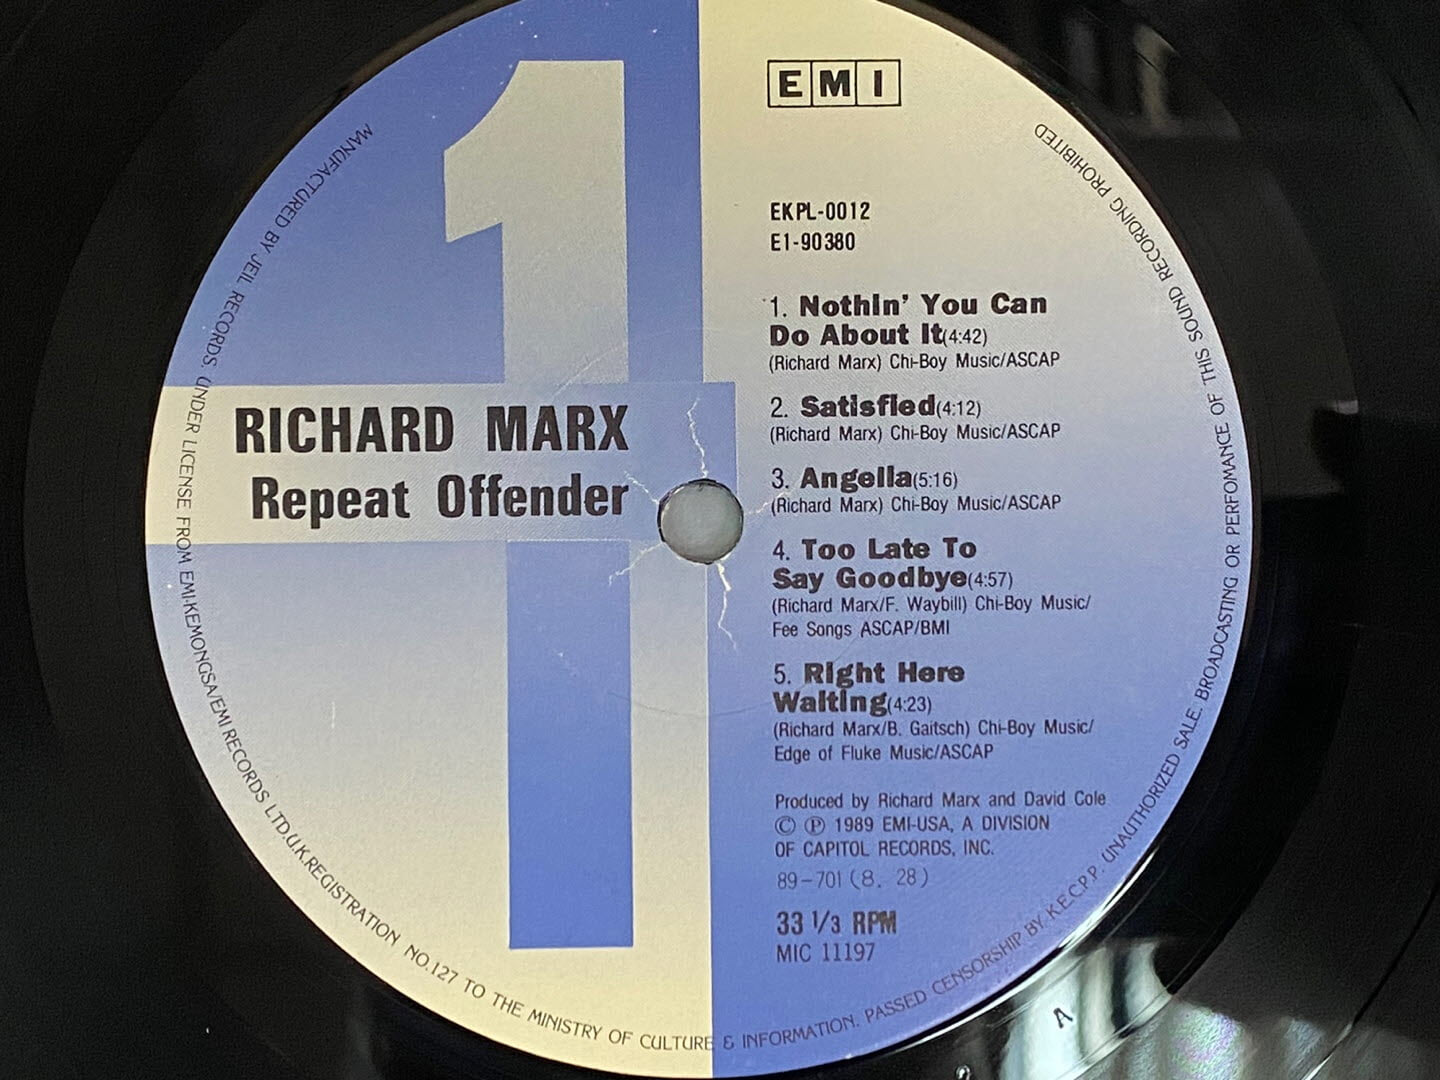 [LP] 리차드 막스 - Richard Marx - Repeat Offender LP [EMI계몽사-라이센스반]